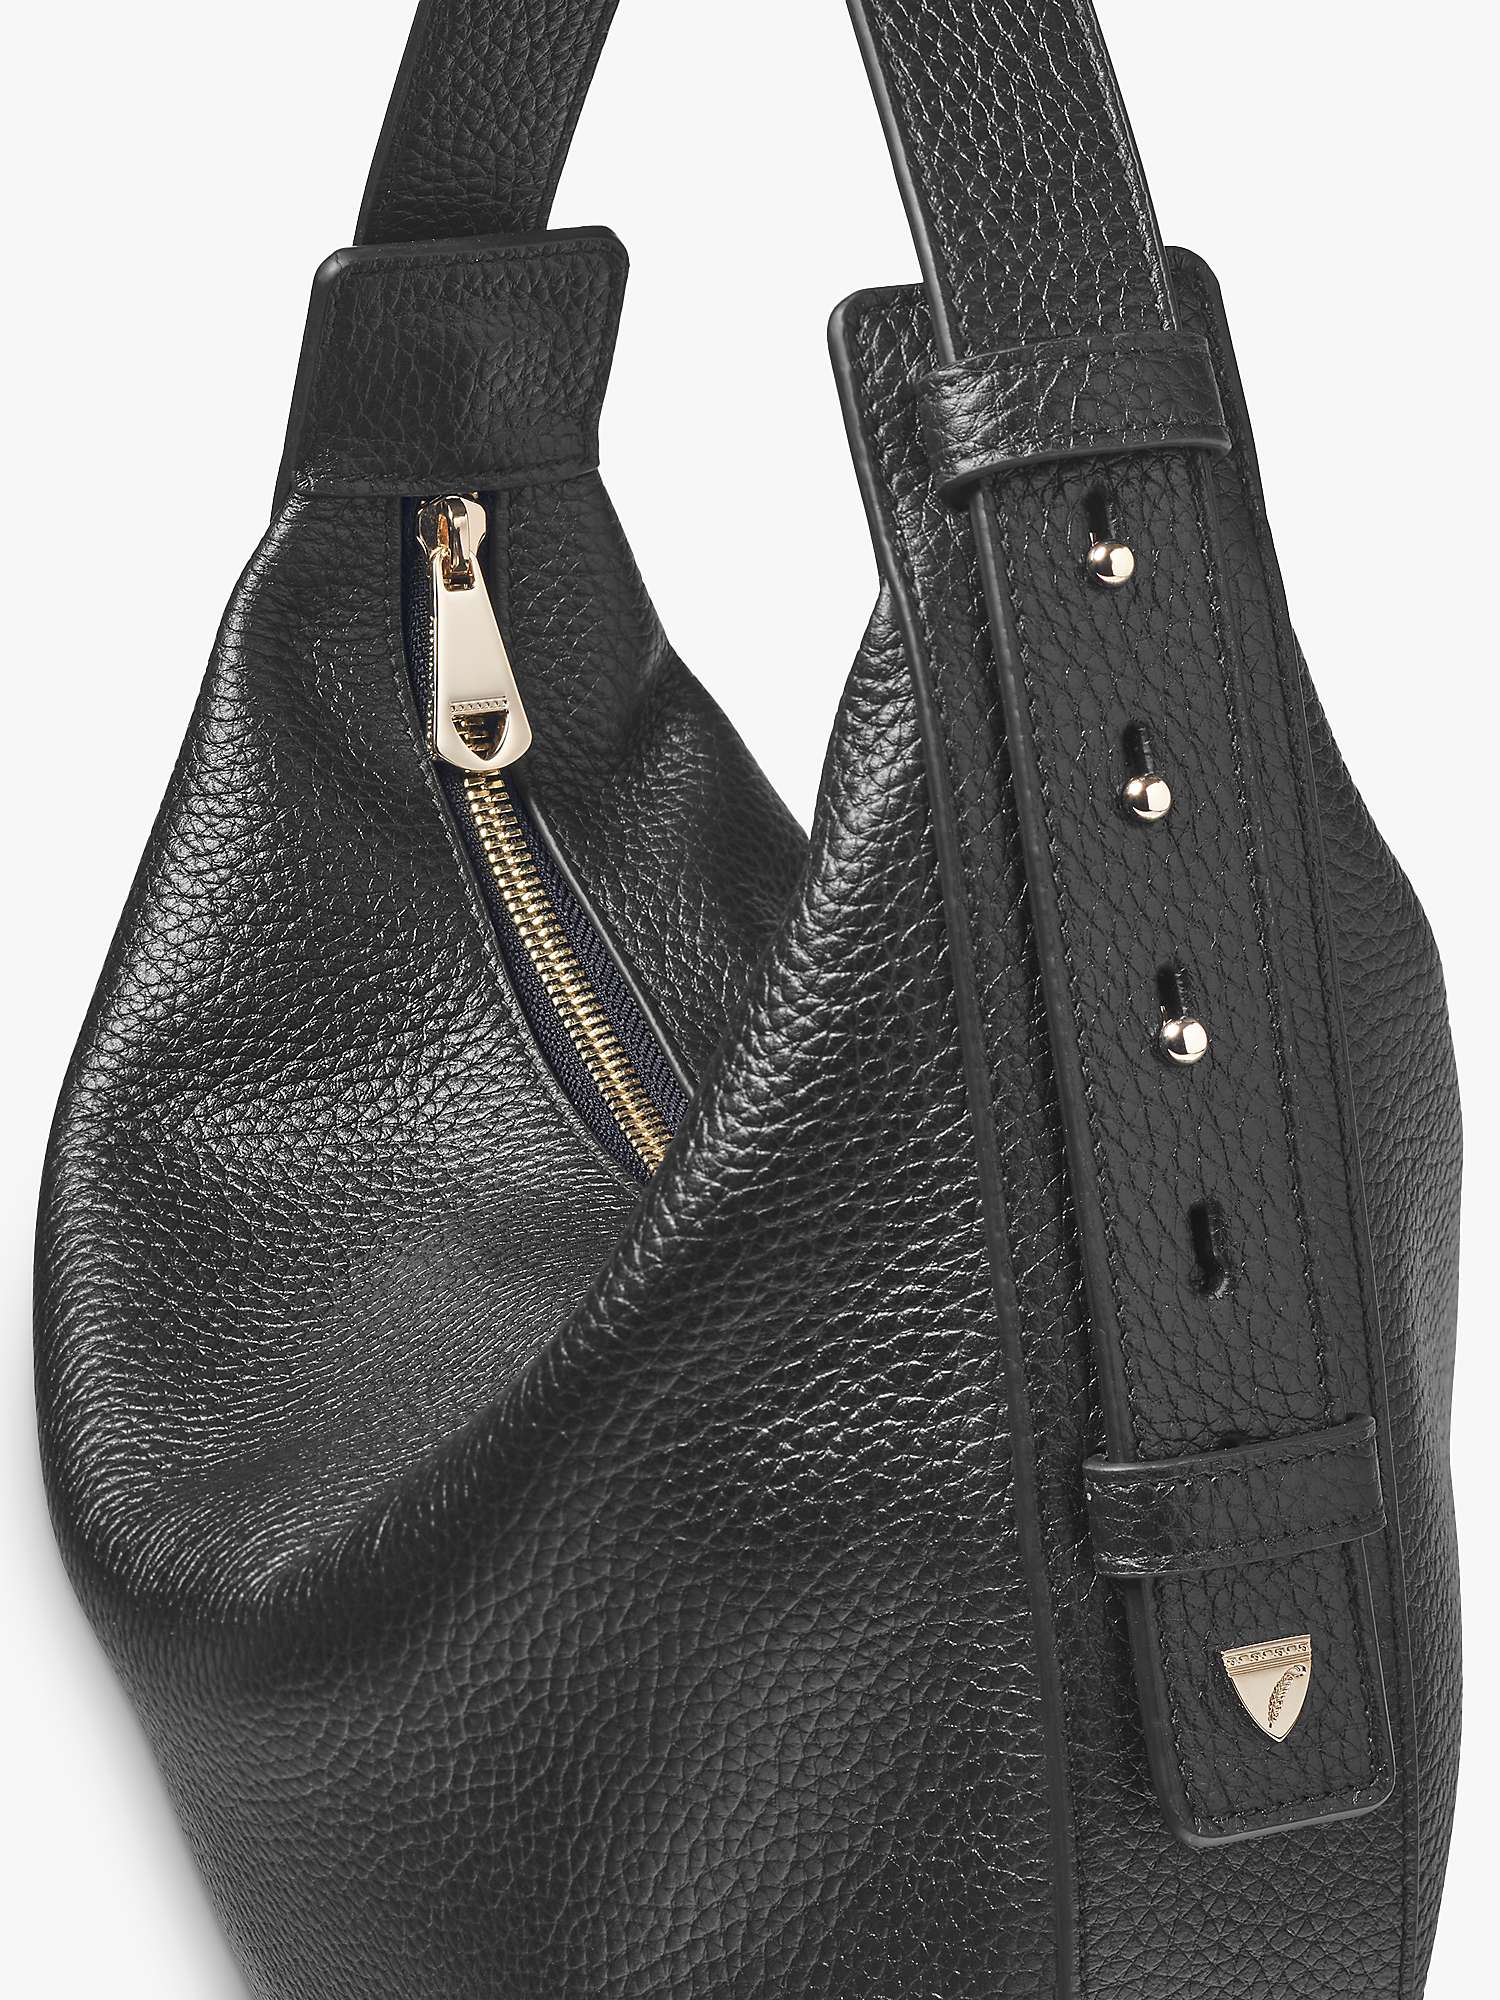 Buy Aspinal of London Pebble Leather Crescent Hobo Bag Online at johnlewis.com